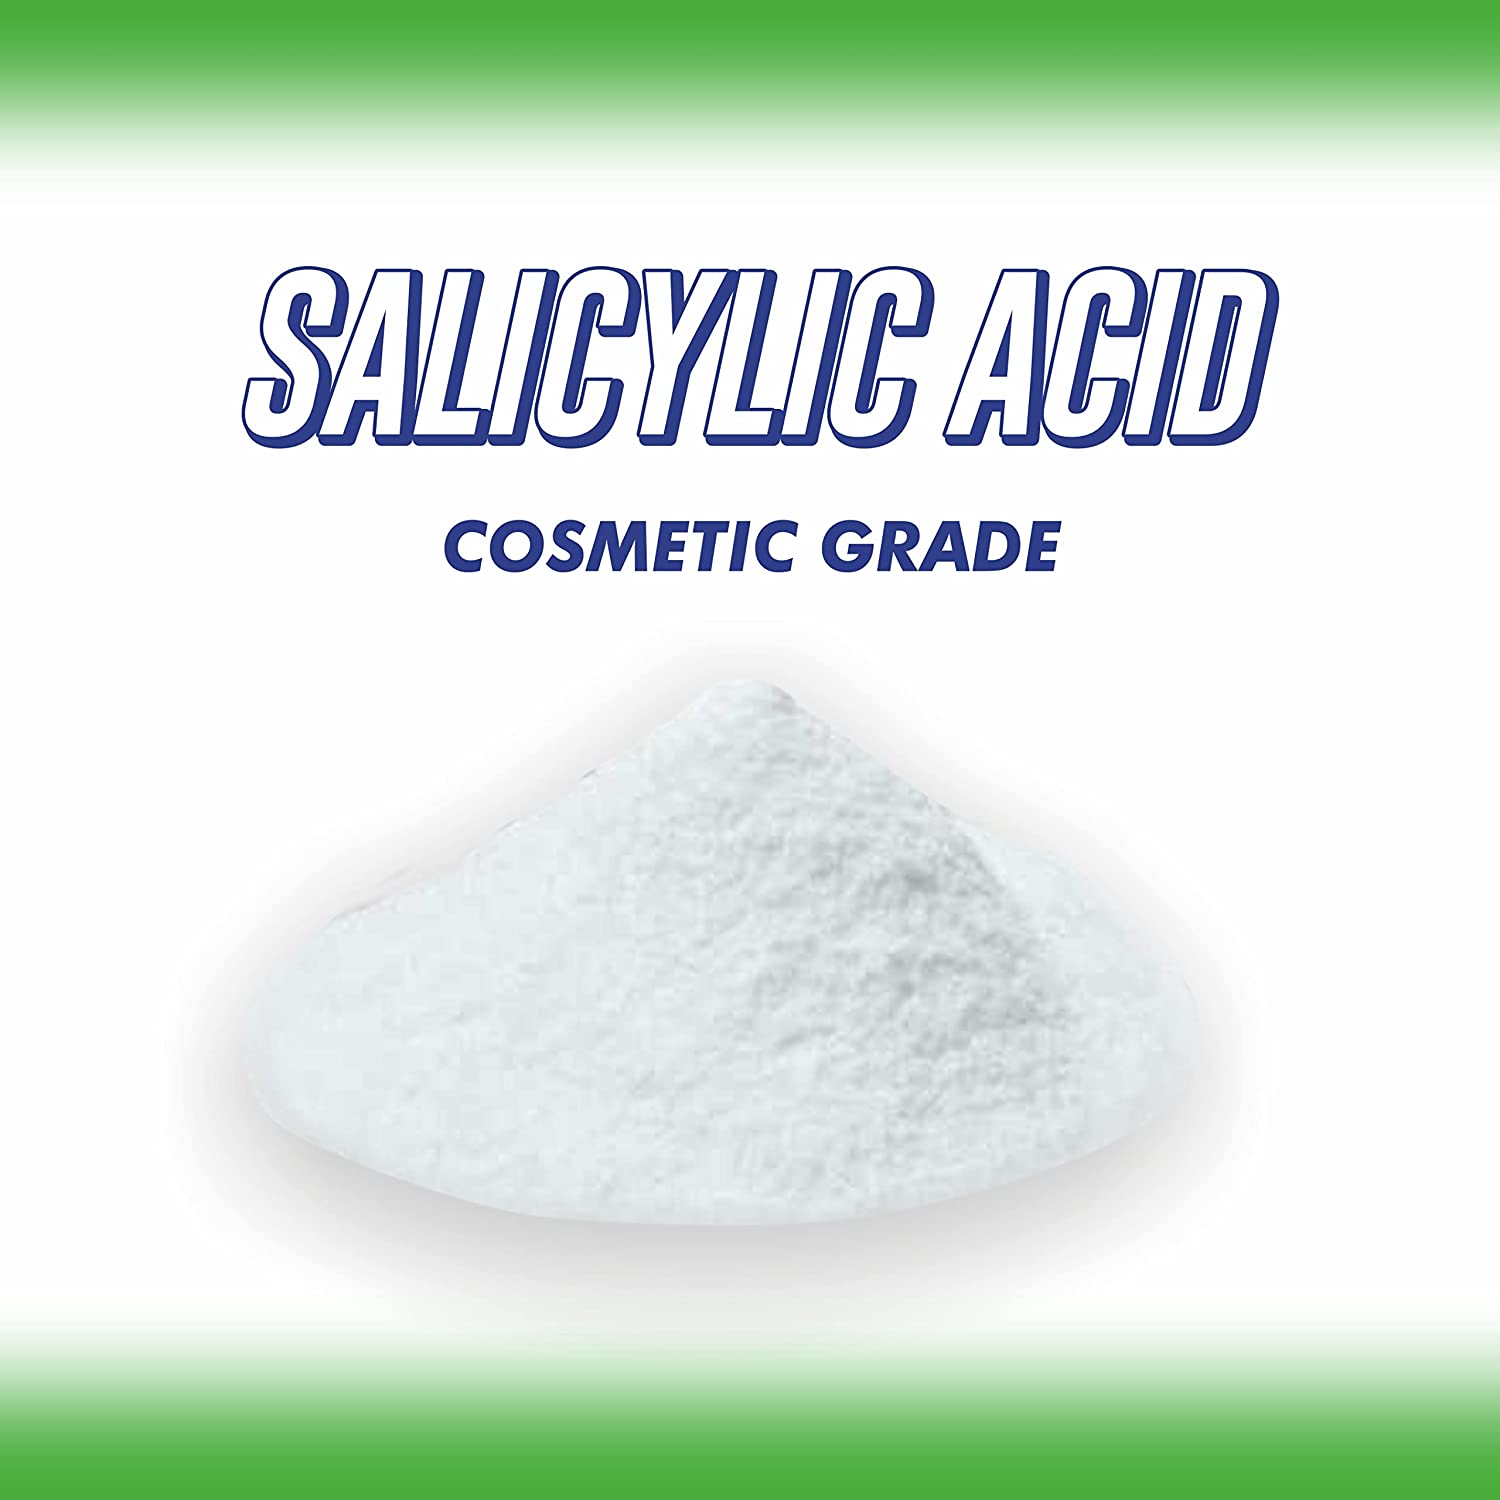 Shoprythm Cosmetic Raw Material Salicylic Powder Uses, Benefits